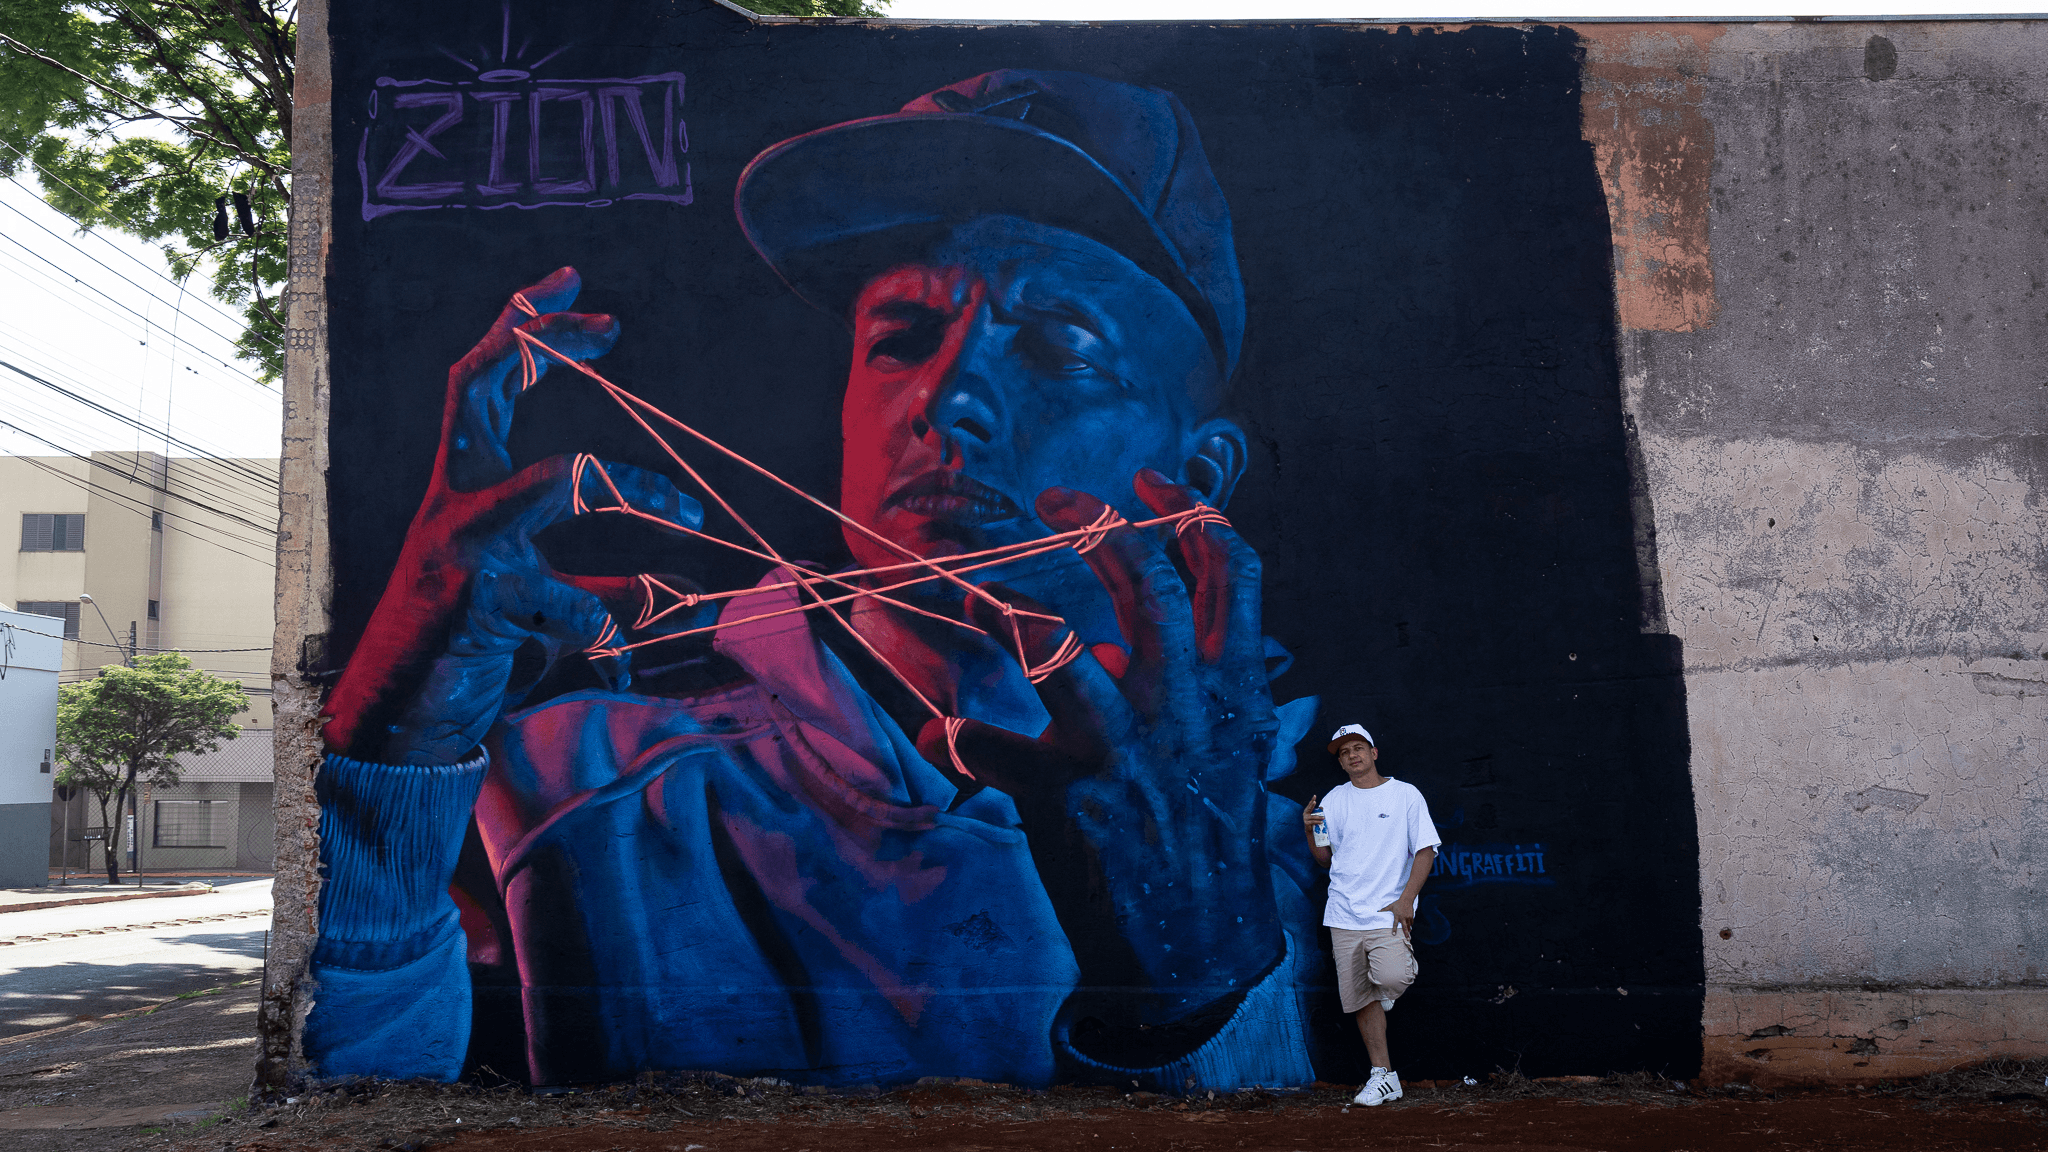 Zion Graffiti - Street artist - Big Face